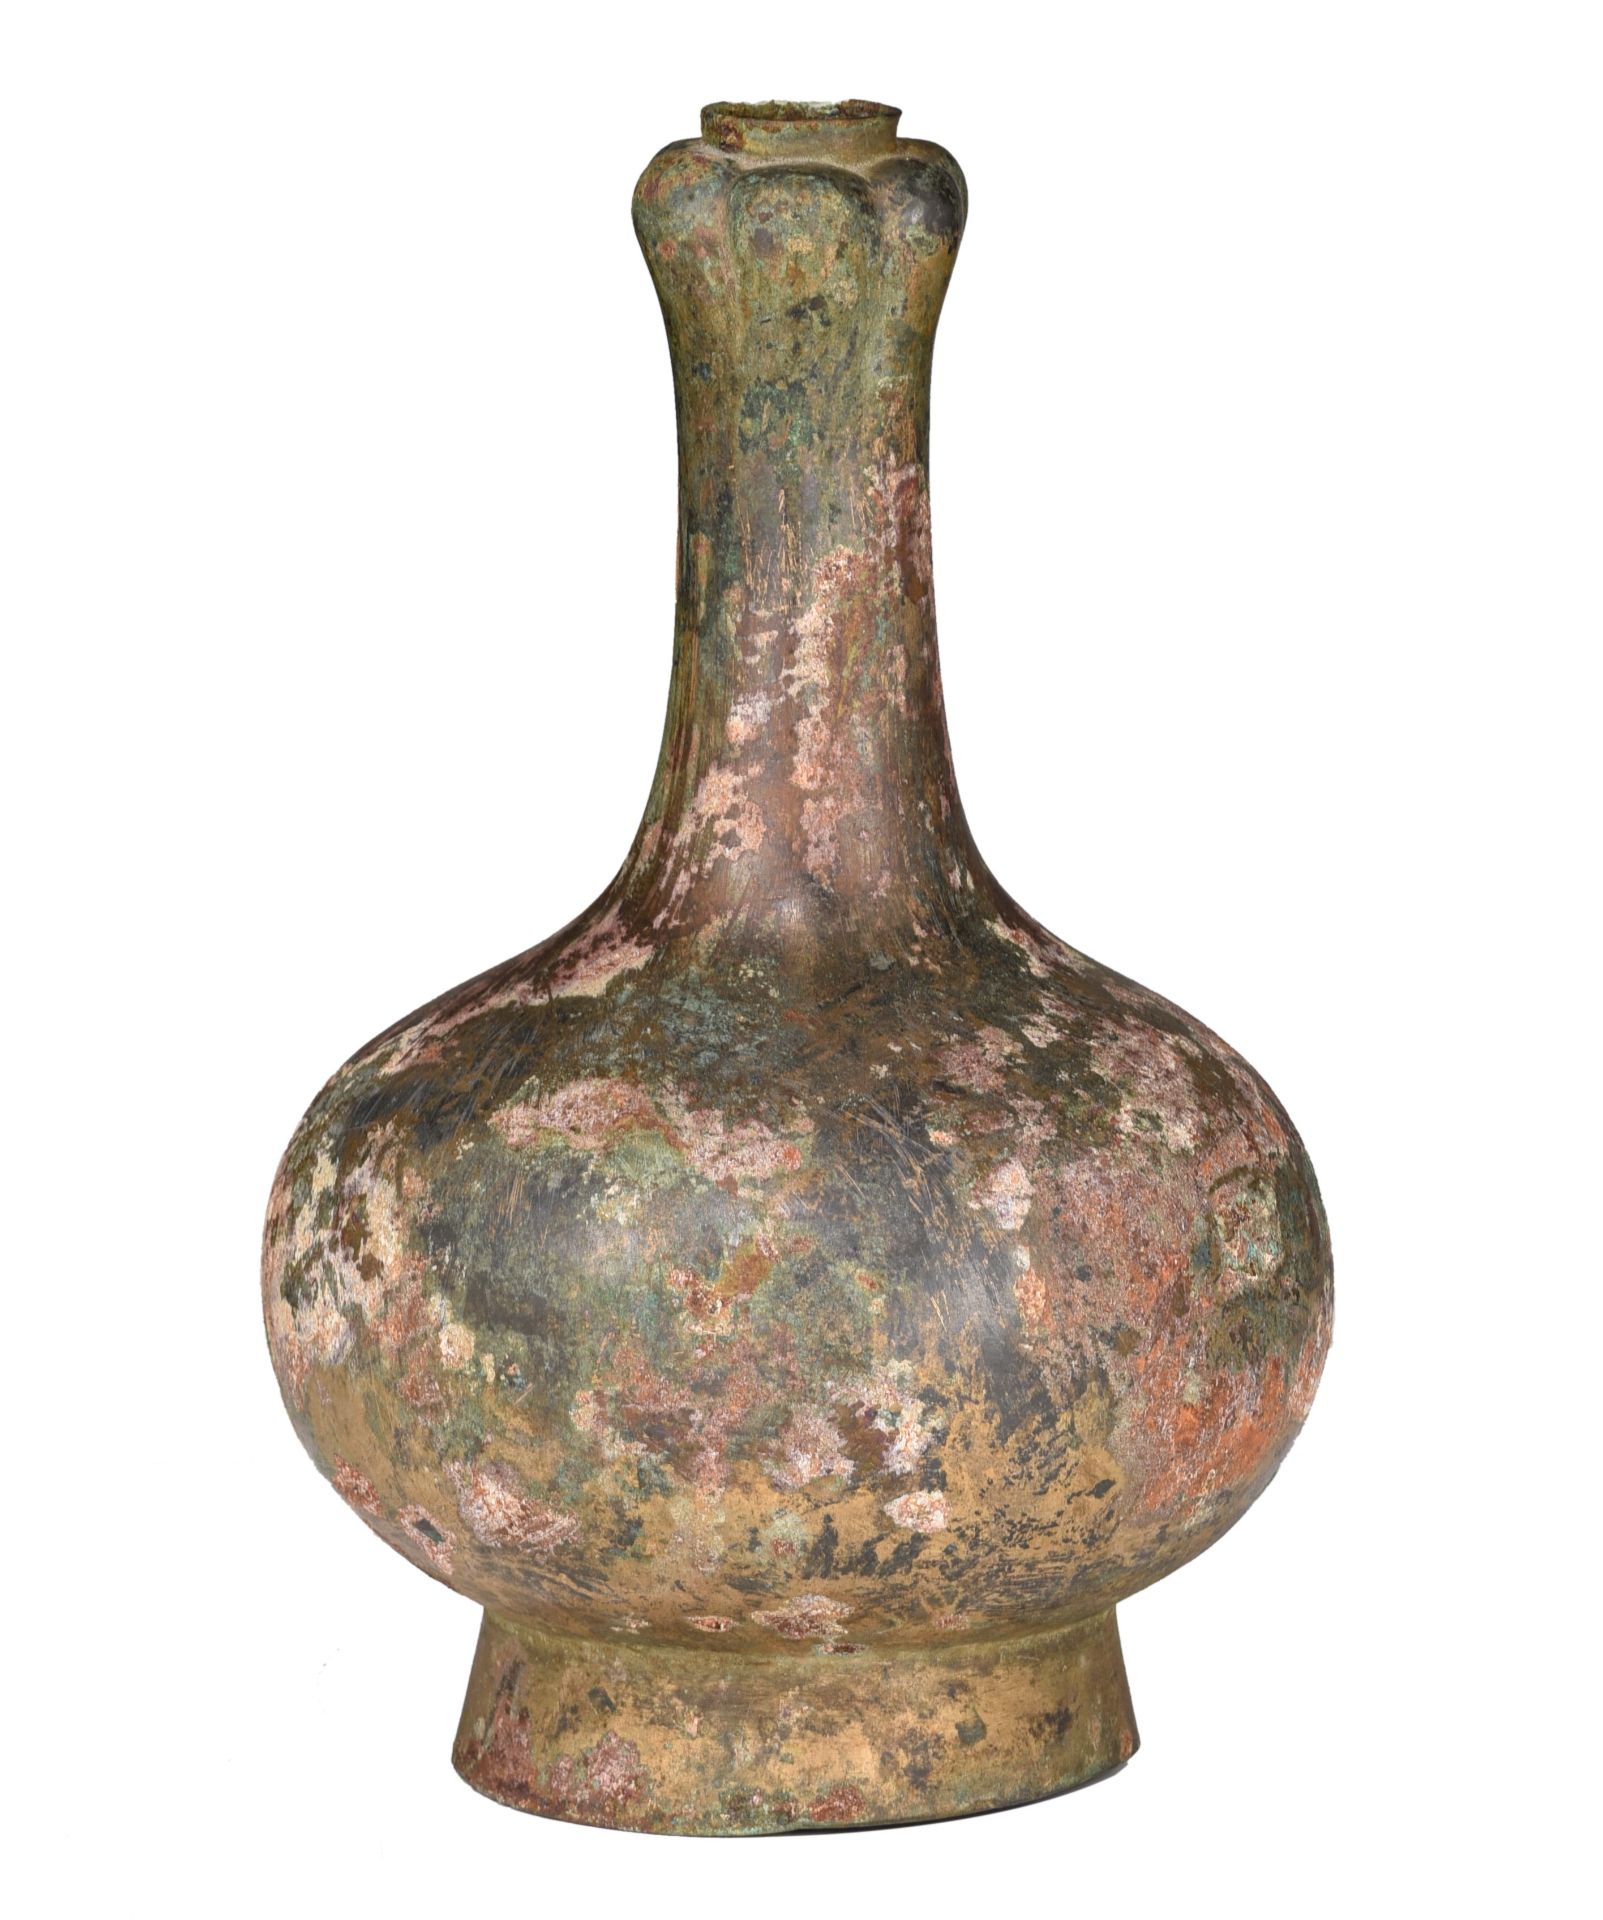 A Chinese bronze garlic-head vase, Han dynasty, H 26 cm